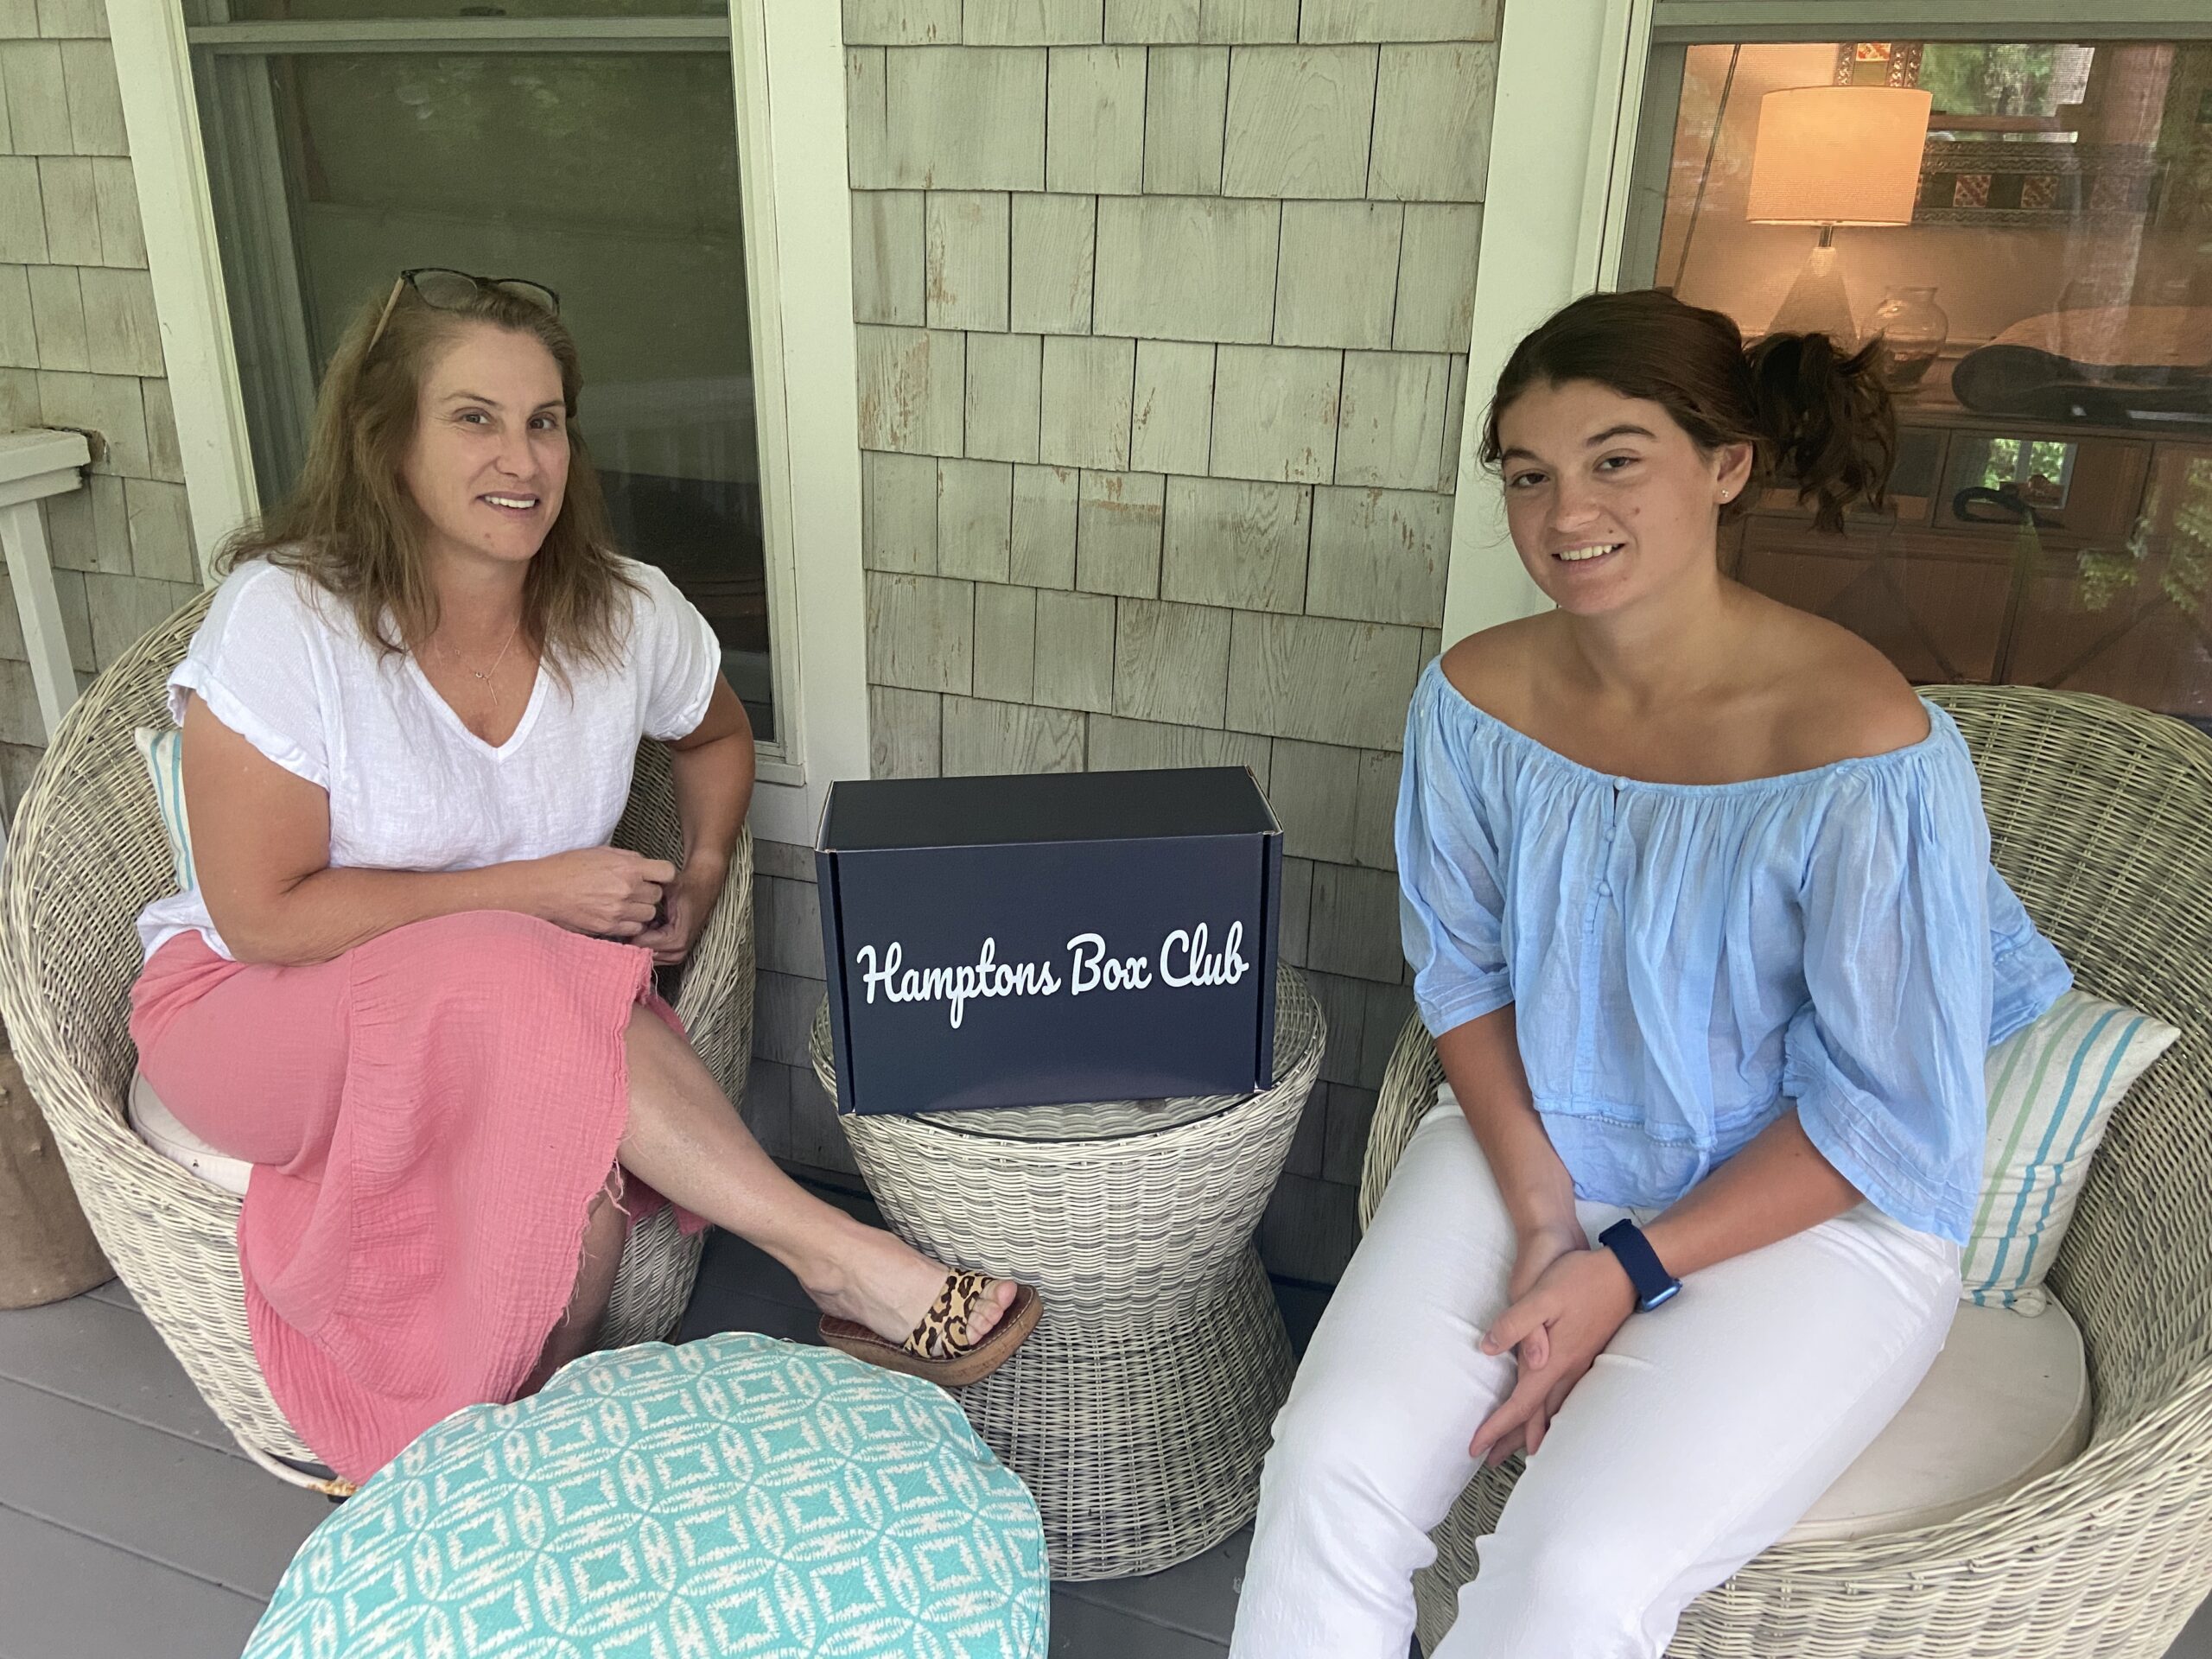 Nicole DiSunno and Tessa Kohr, the mother dauther duo that created and runs Hamptons Box Club at their home in East Hampton. JULIA HEMING